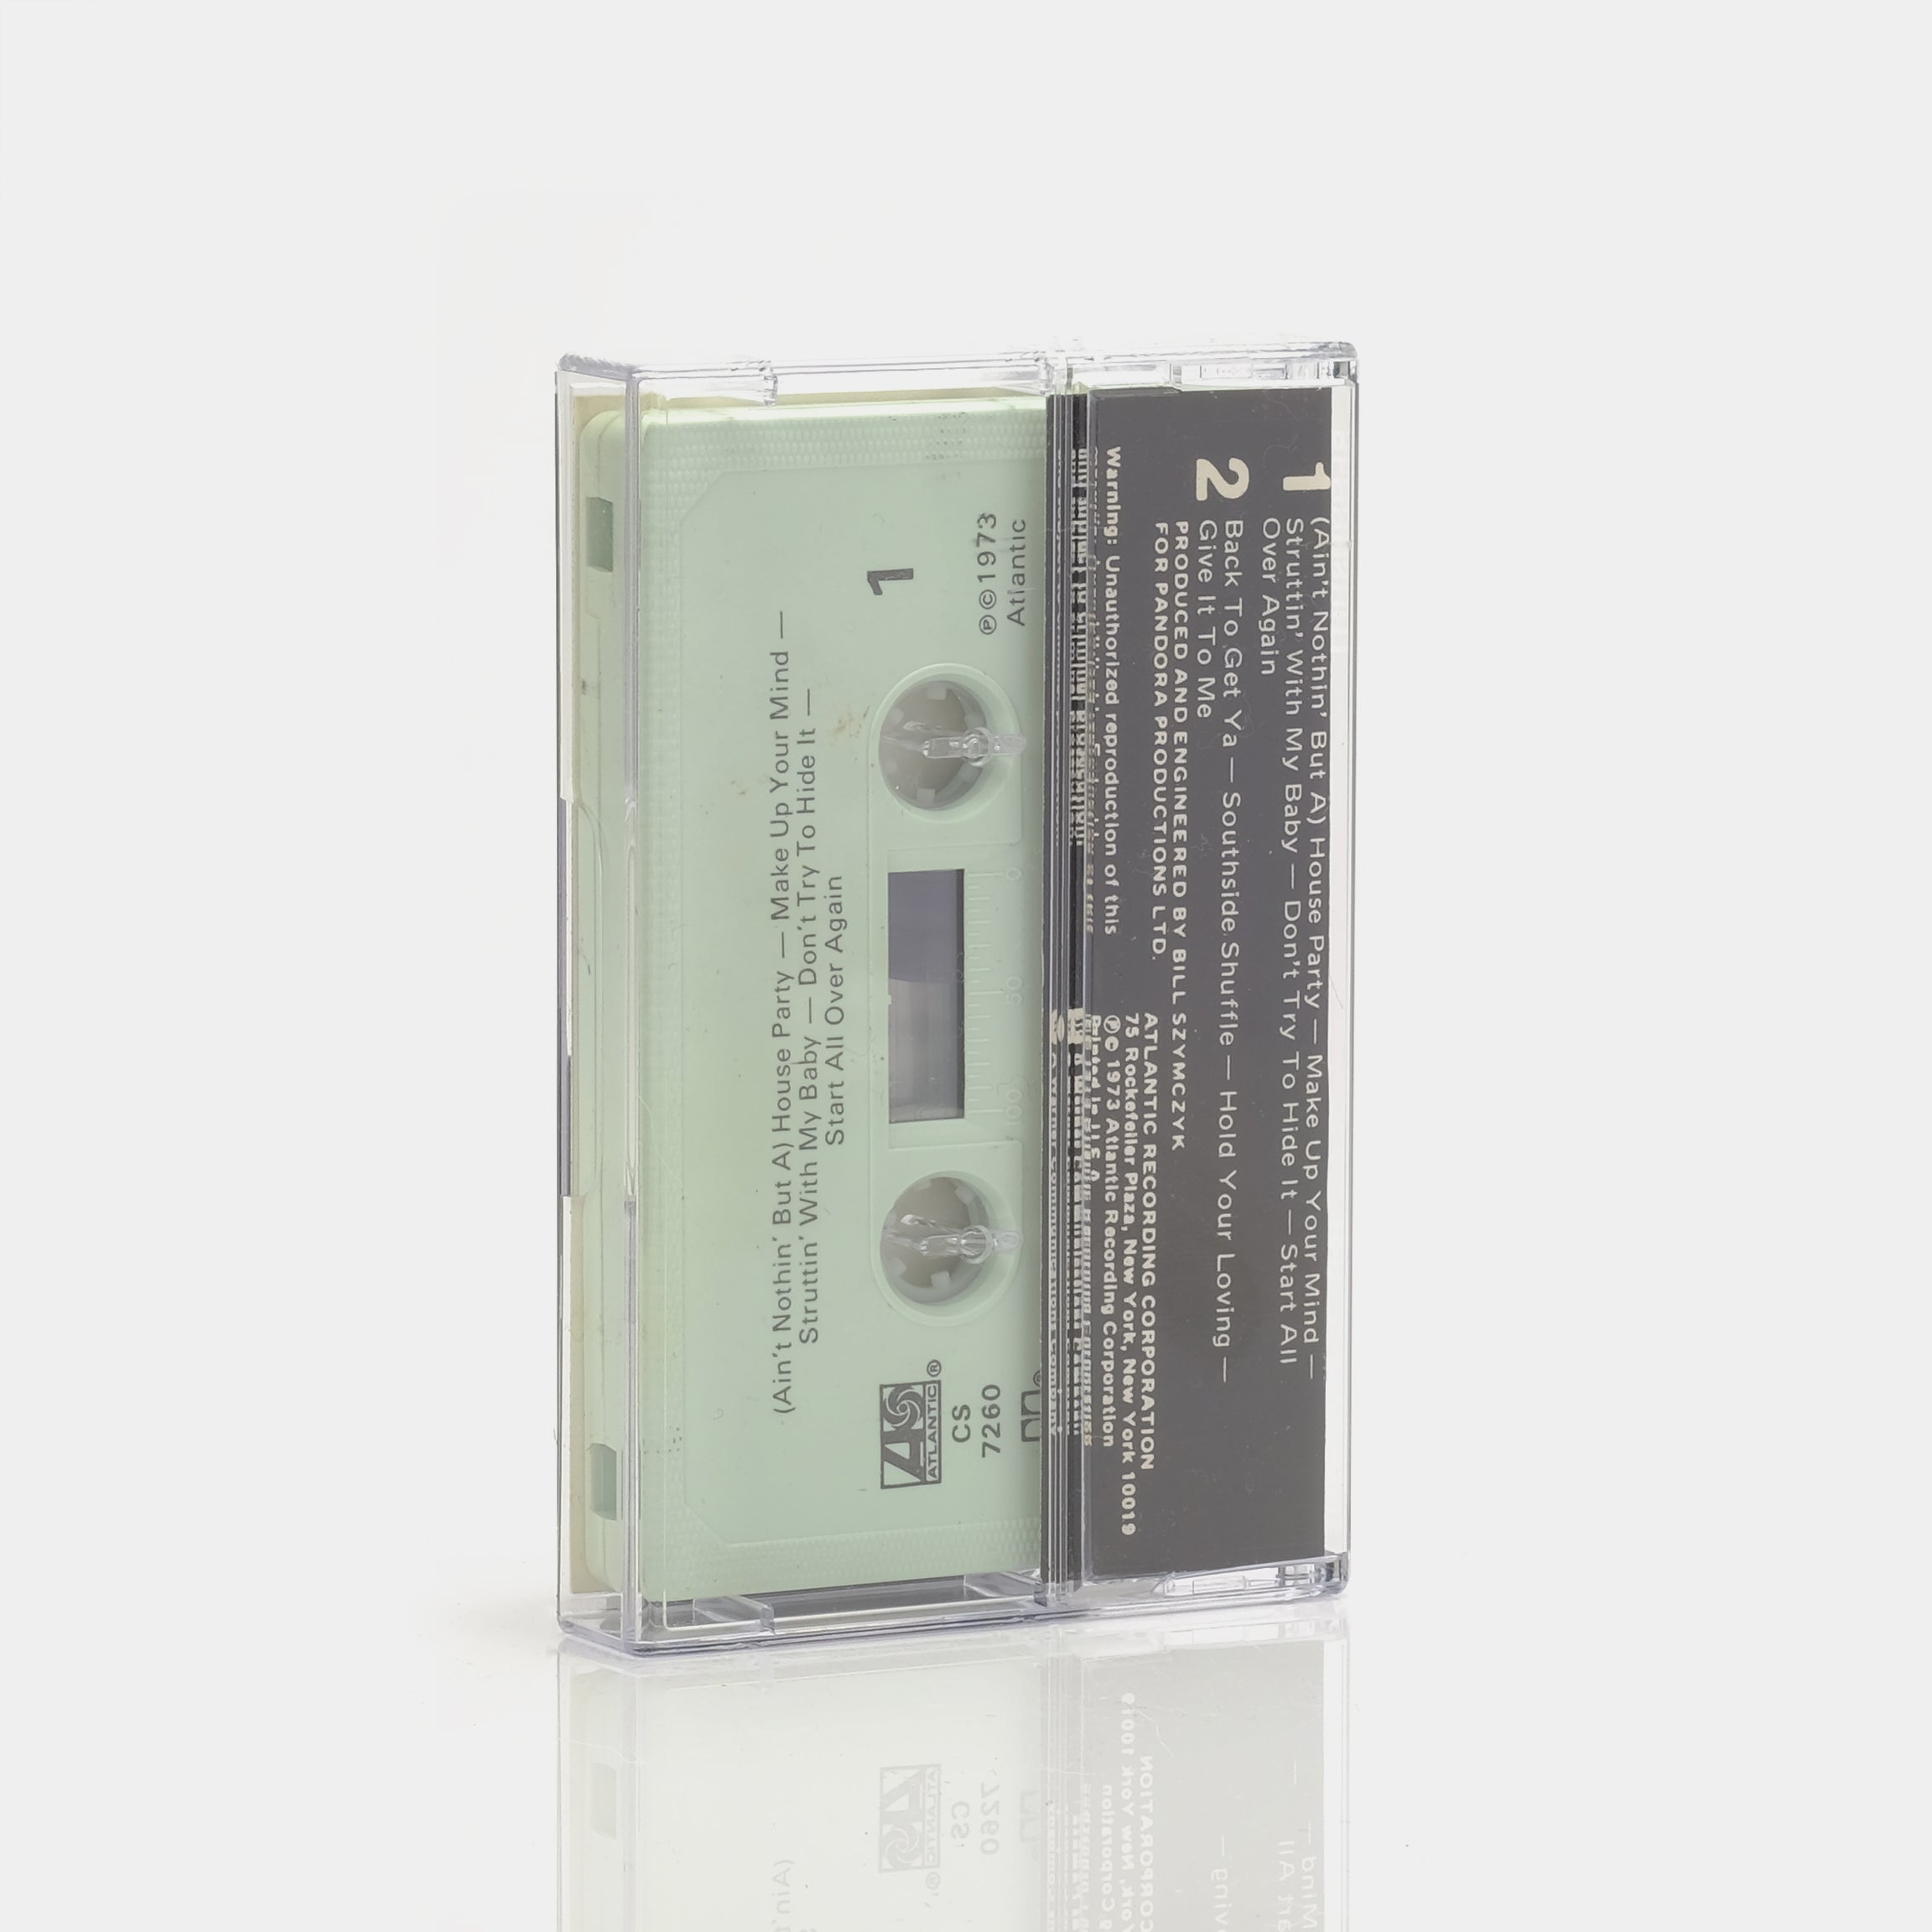 The J. Geils Band - Bloodshot Cassette Tape